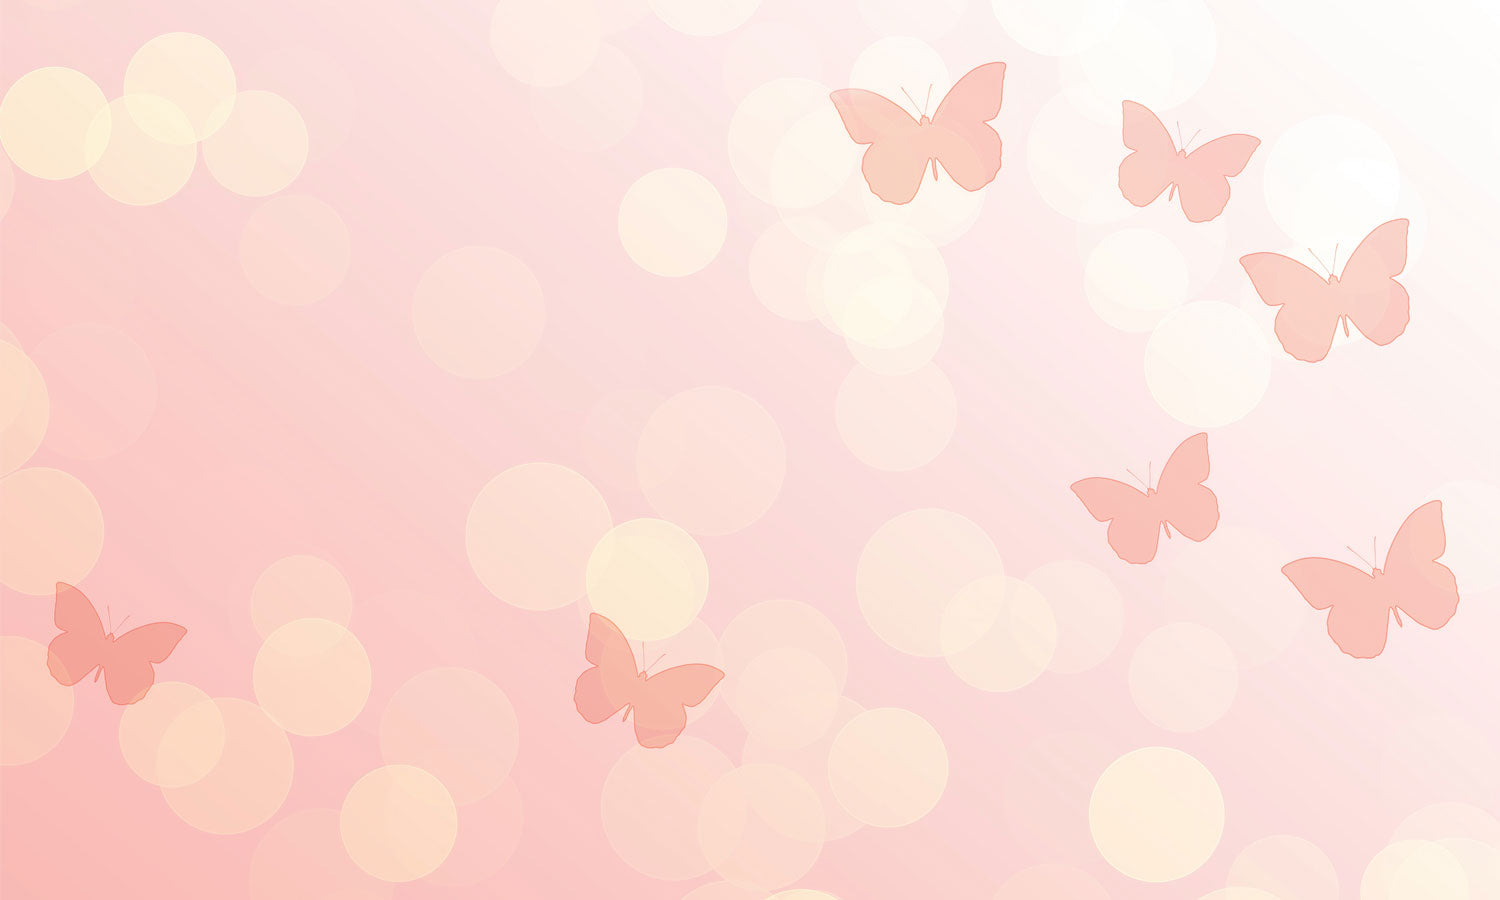 Paneli za kuhinje Pink  butterflies -  Stakleni / PVC ploče / Pleksiglas -  sa printom za kuhinju, Zidne obloge PKU153